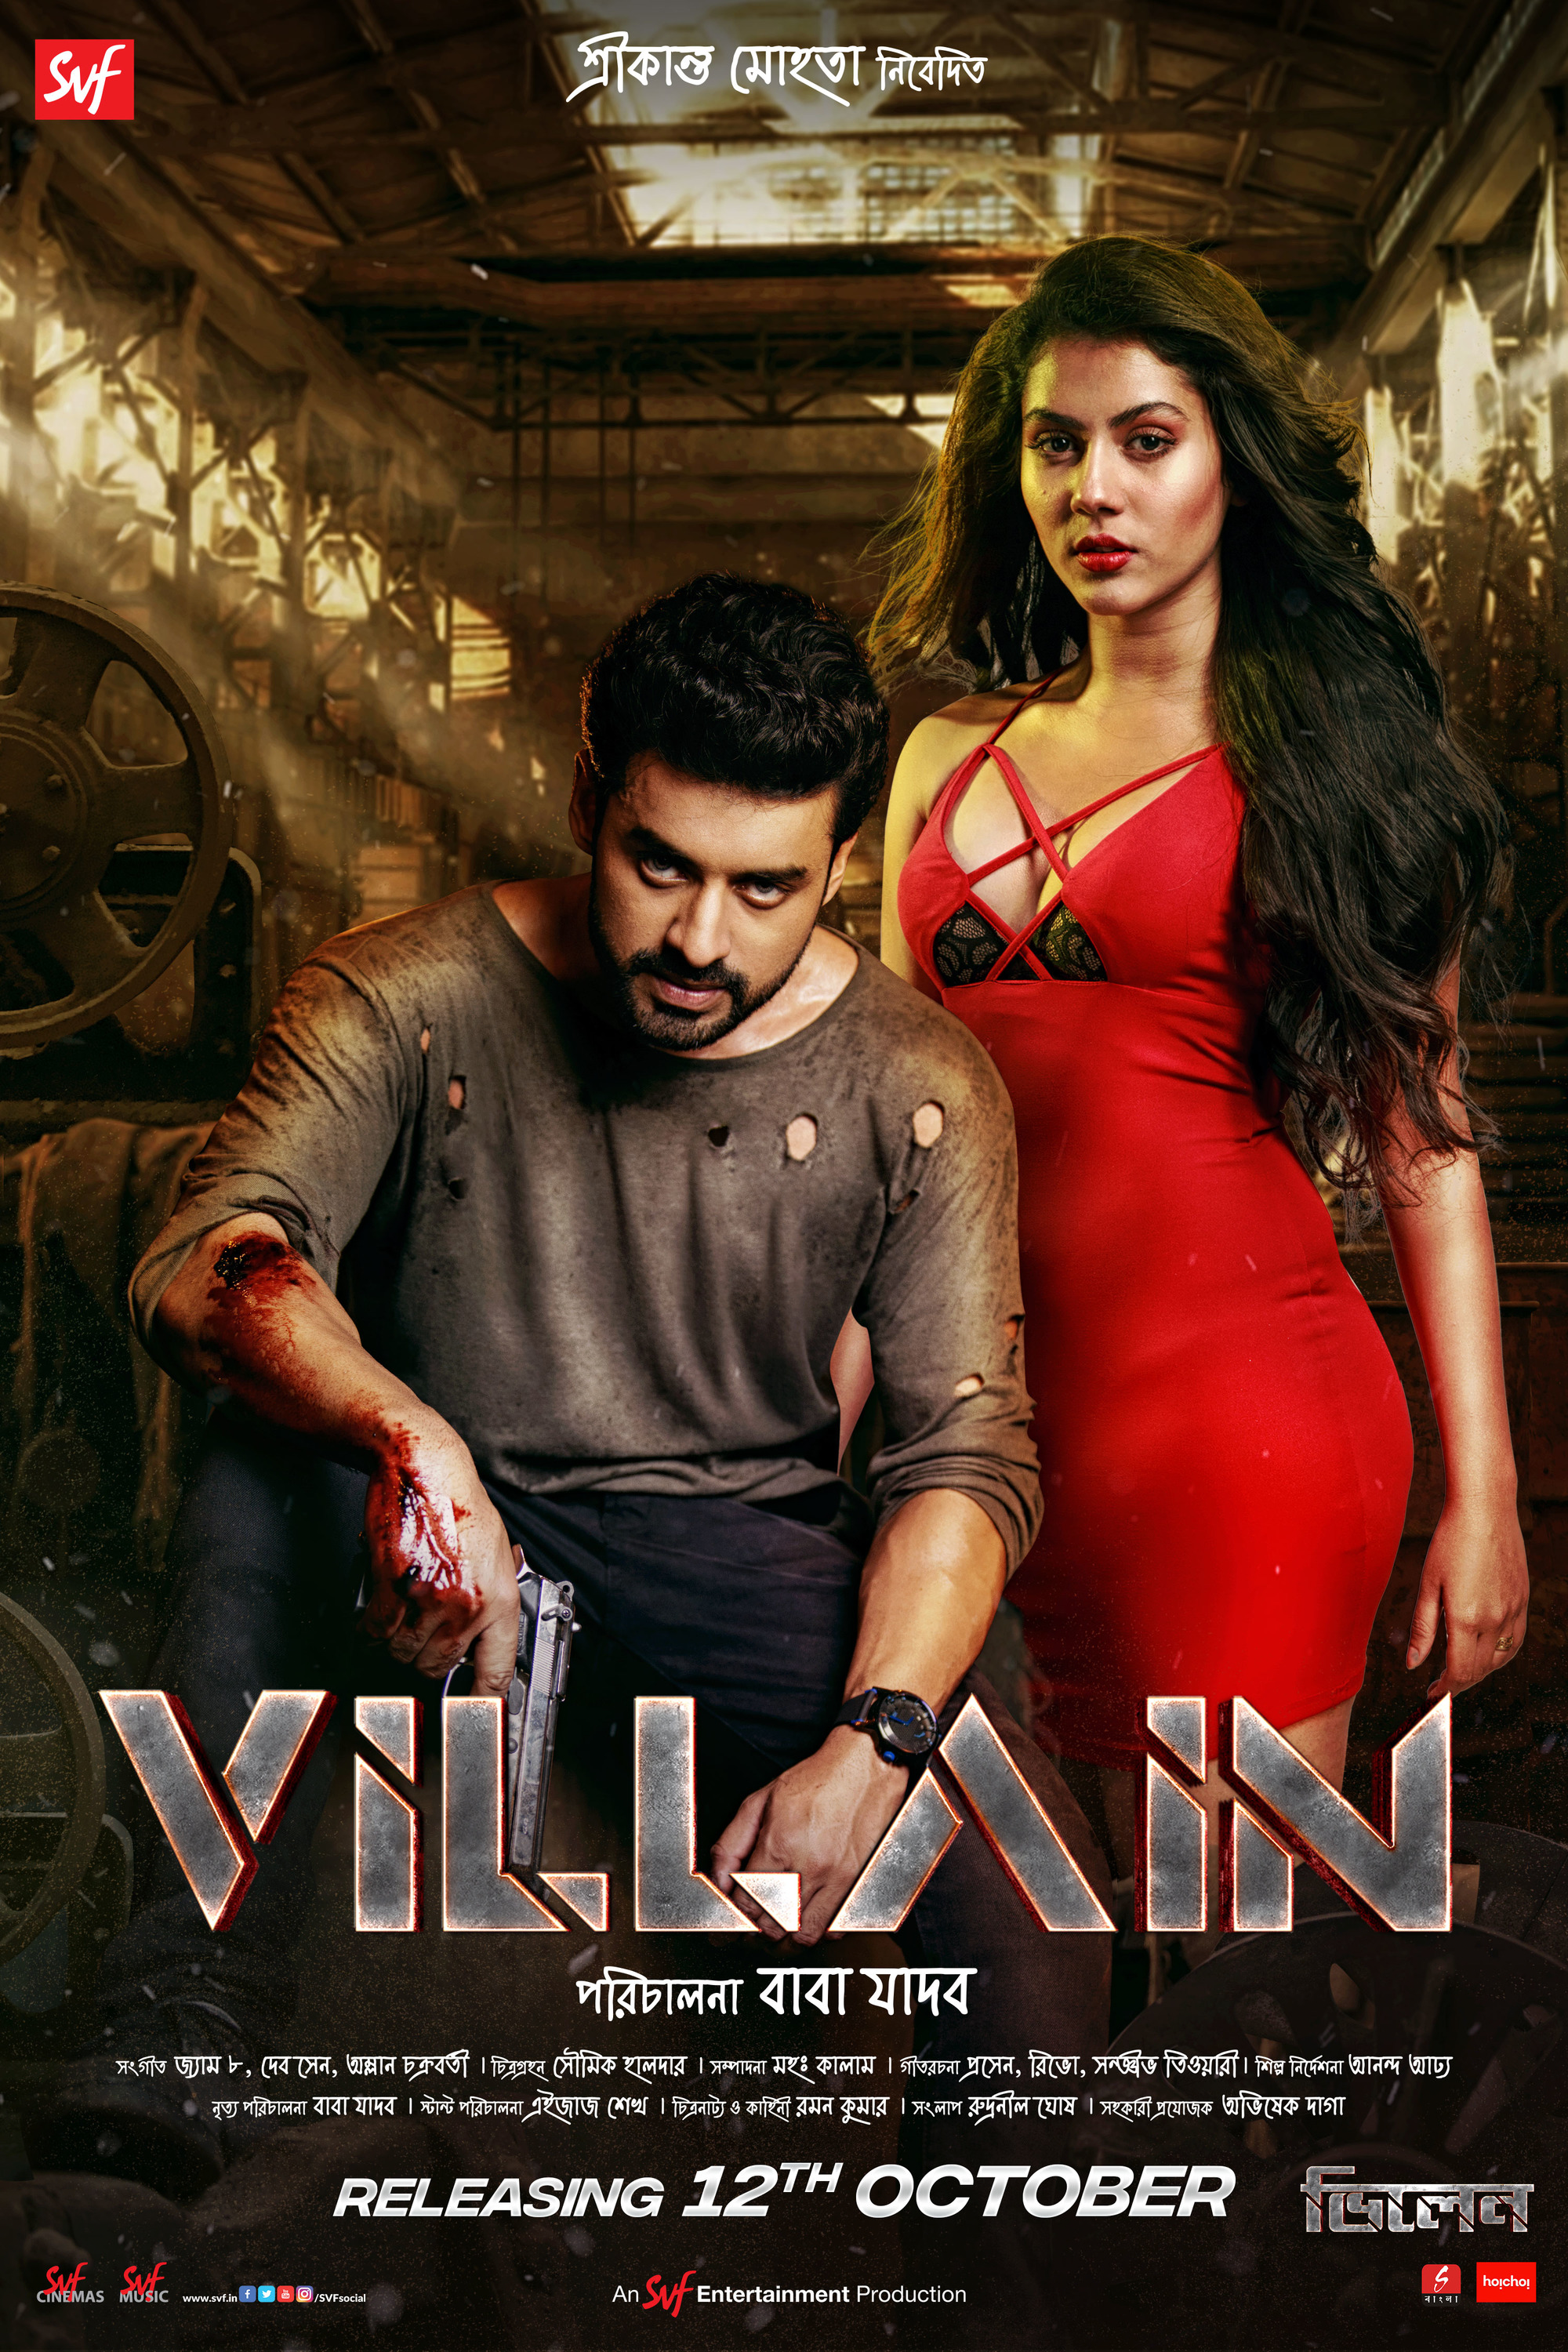 Mega Sized Movie Poster Image for Villain (#2 of 4)